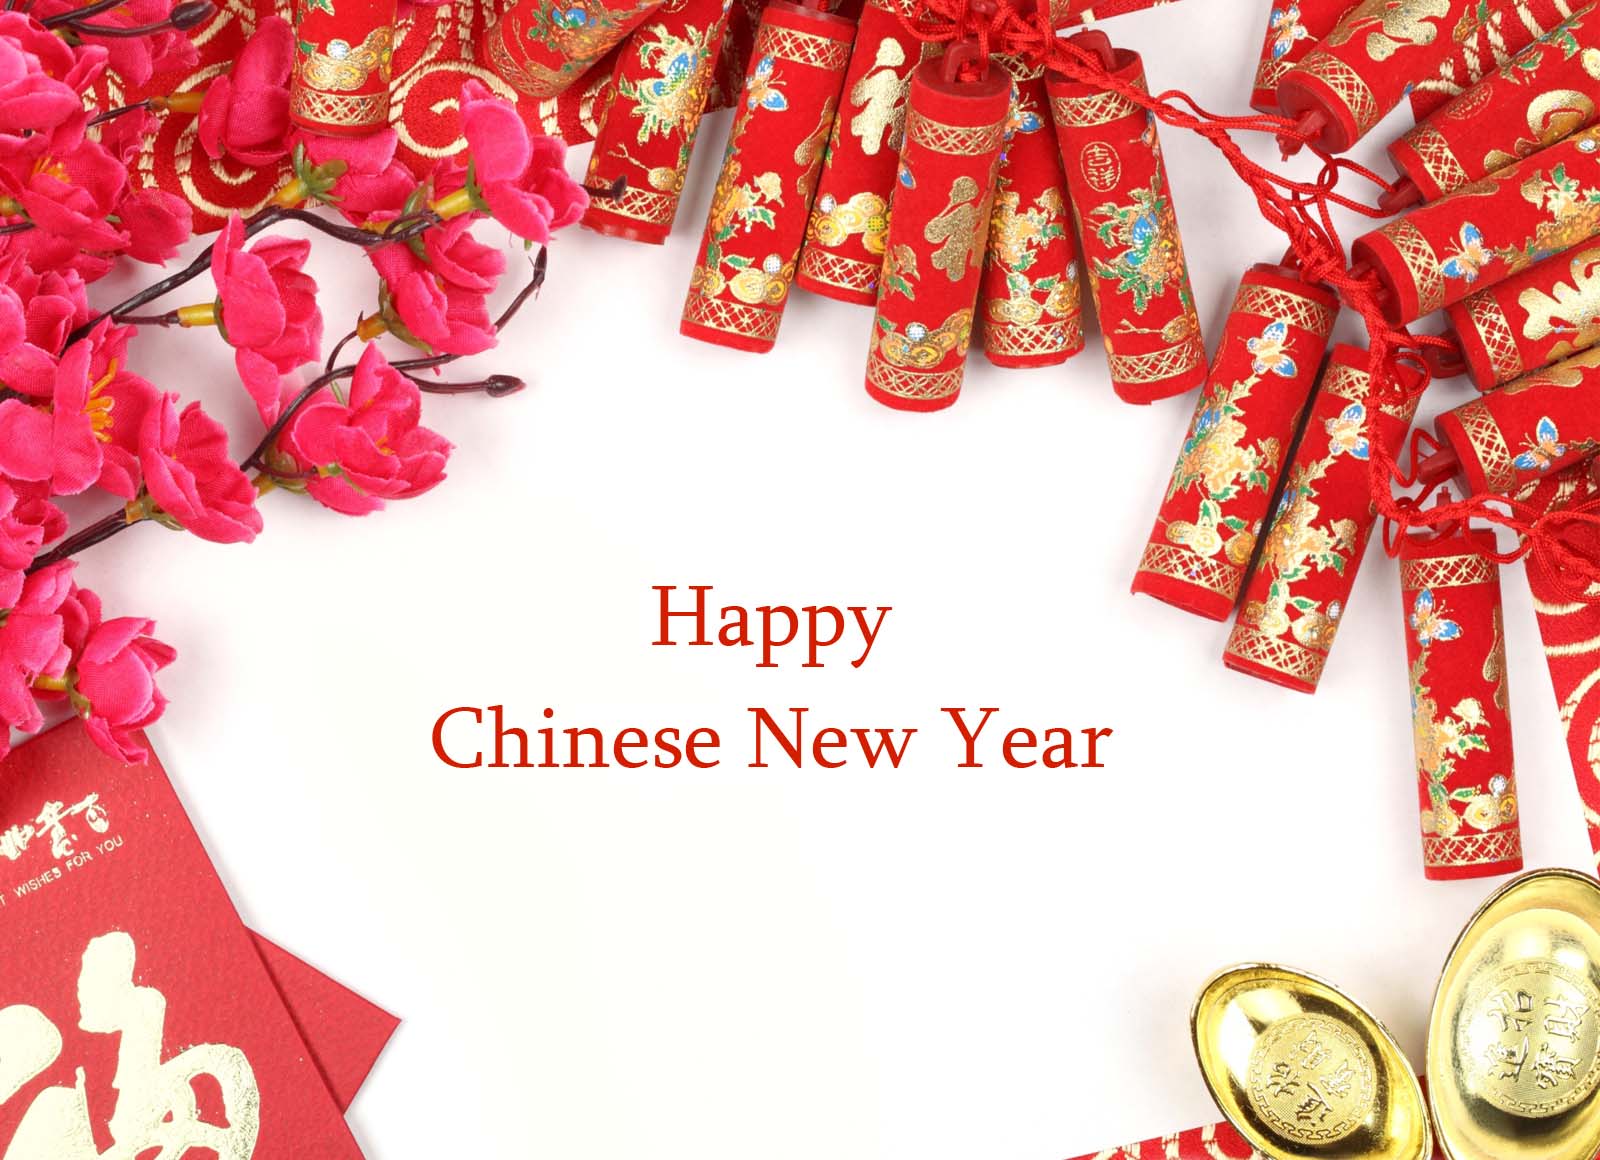 Chinese New Year Wallpaper & Celebration Image